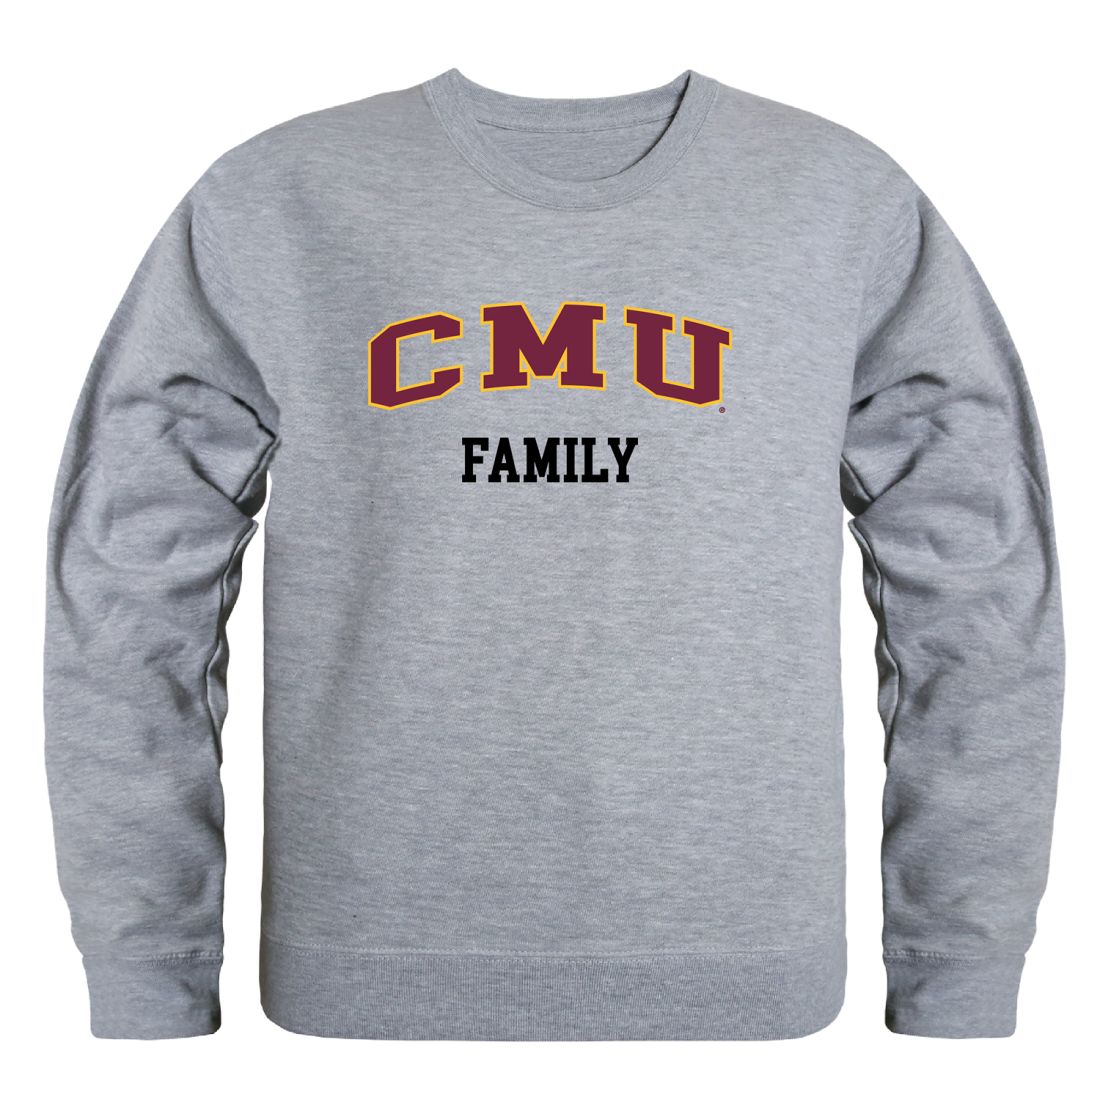 CMU-Central-Michigan-University-Chippewas-Family-Fleece-Crewneck-Pullover-Sweatshirt